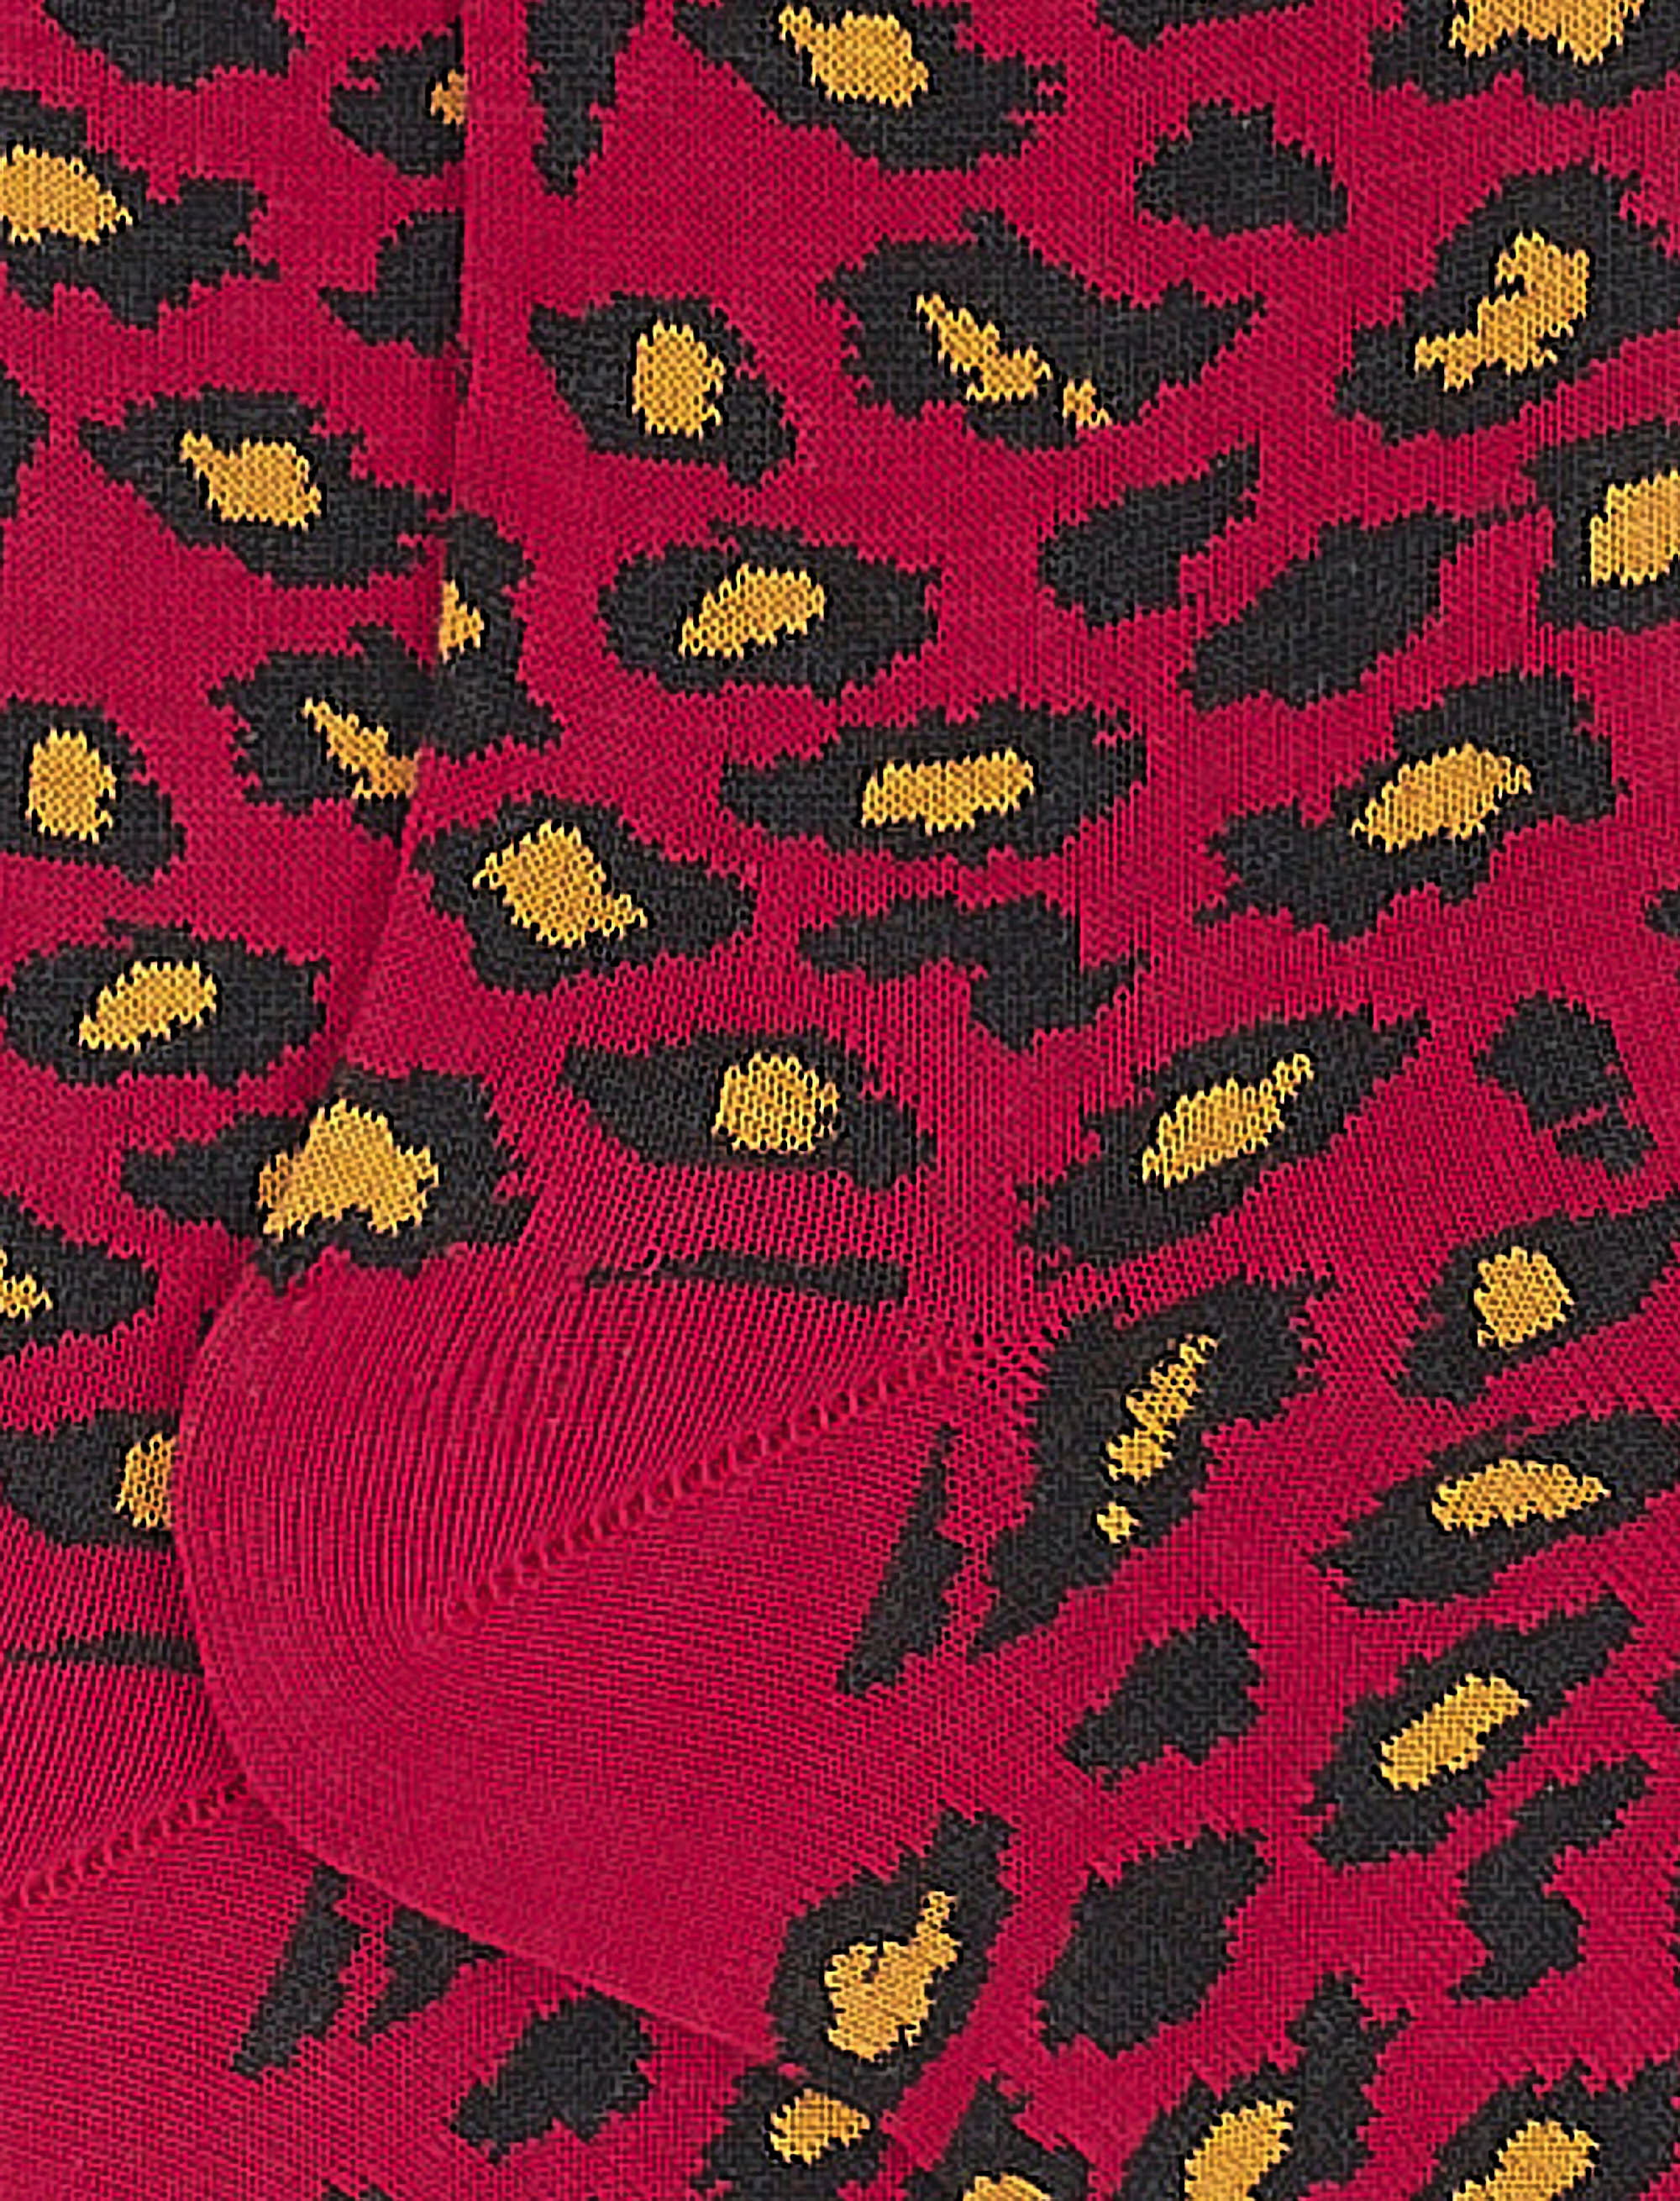 Calze lunghe donna cotone rubino righe multicolor con fascia maculata - Gallo 1927 - Official Online Shop